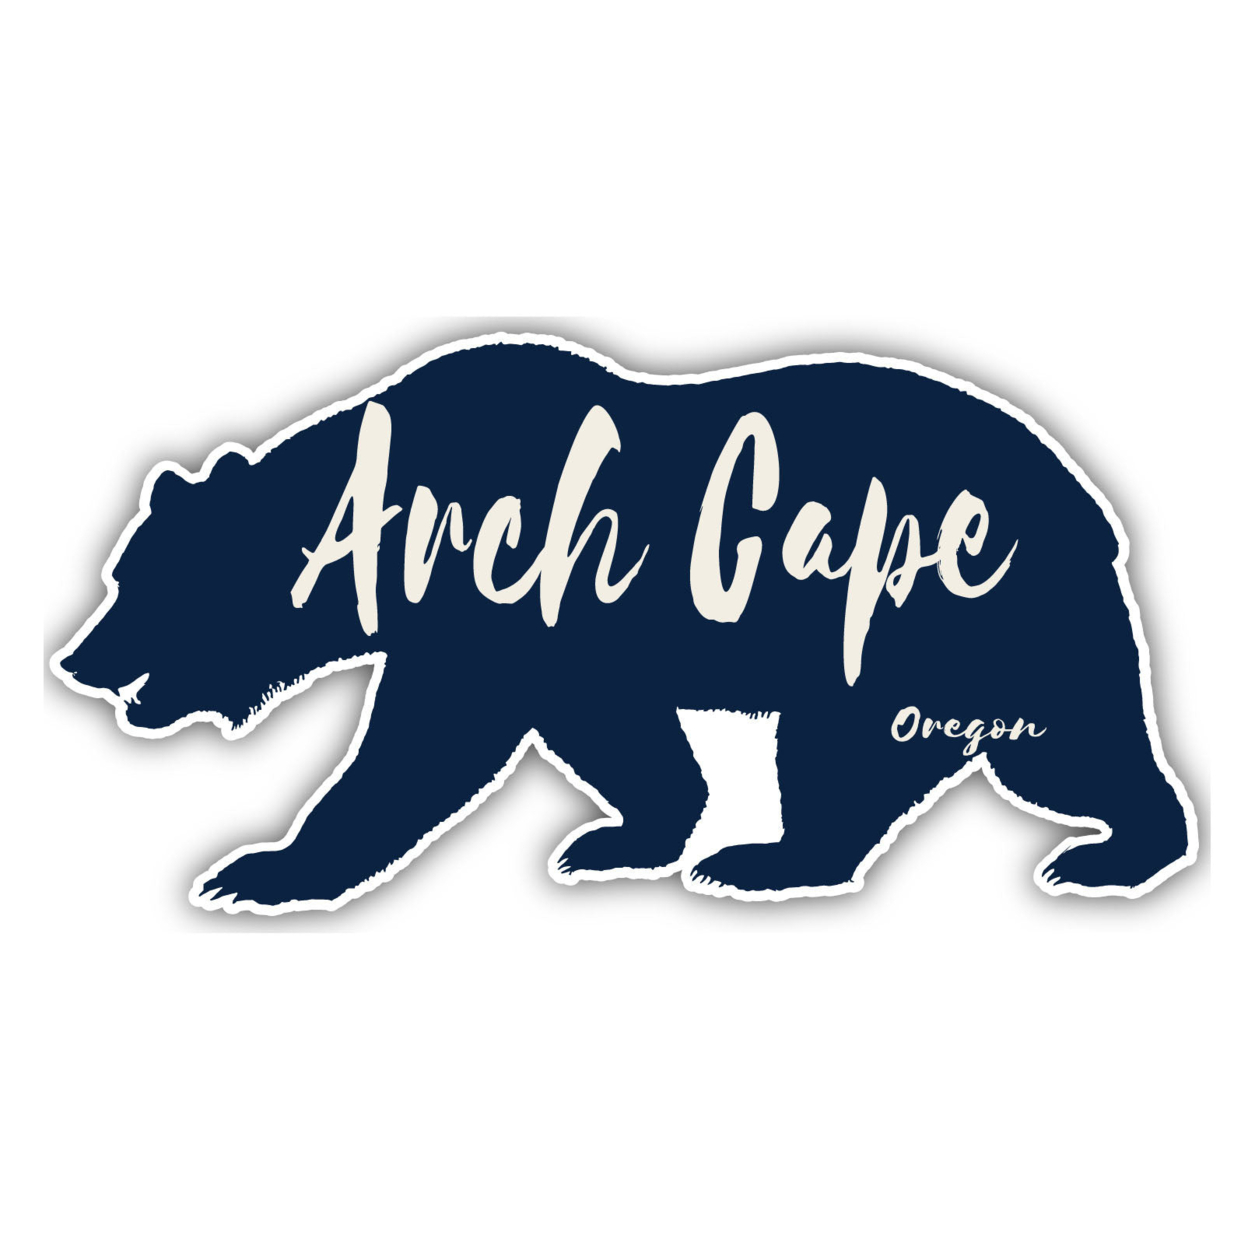 Arch Cape Oregon Souvenir Decorative Stickers (Choose Theme And Size) - Single Unit, 6-Inch, Bear